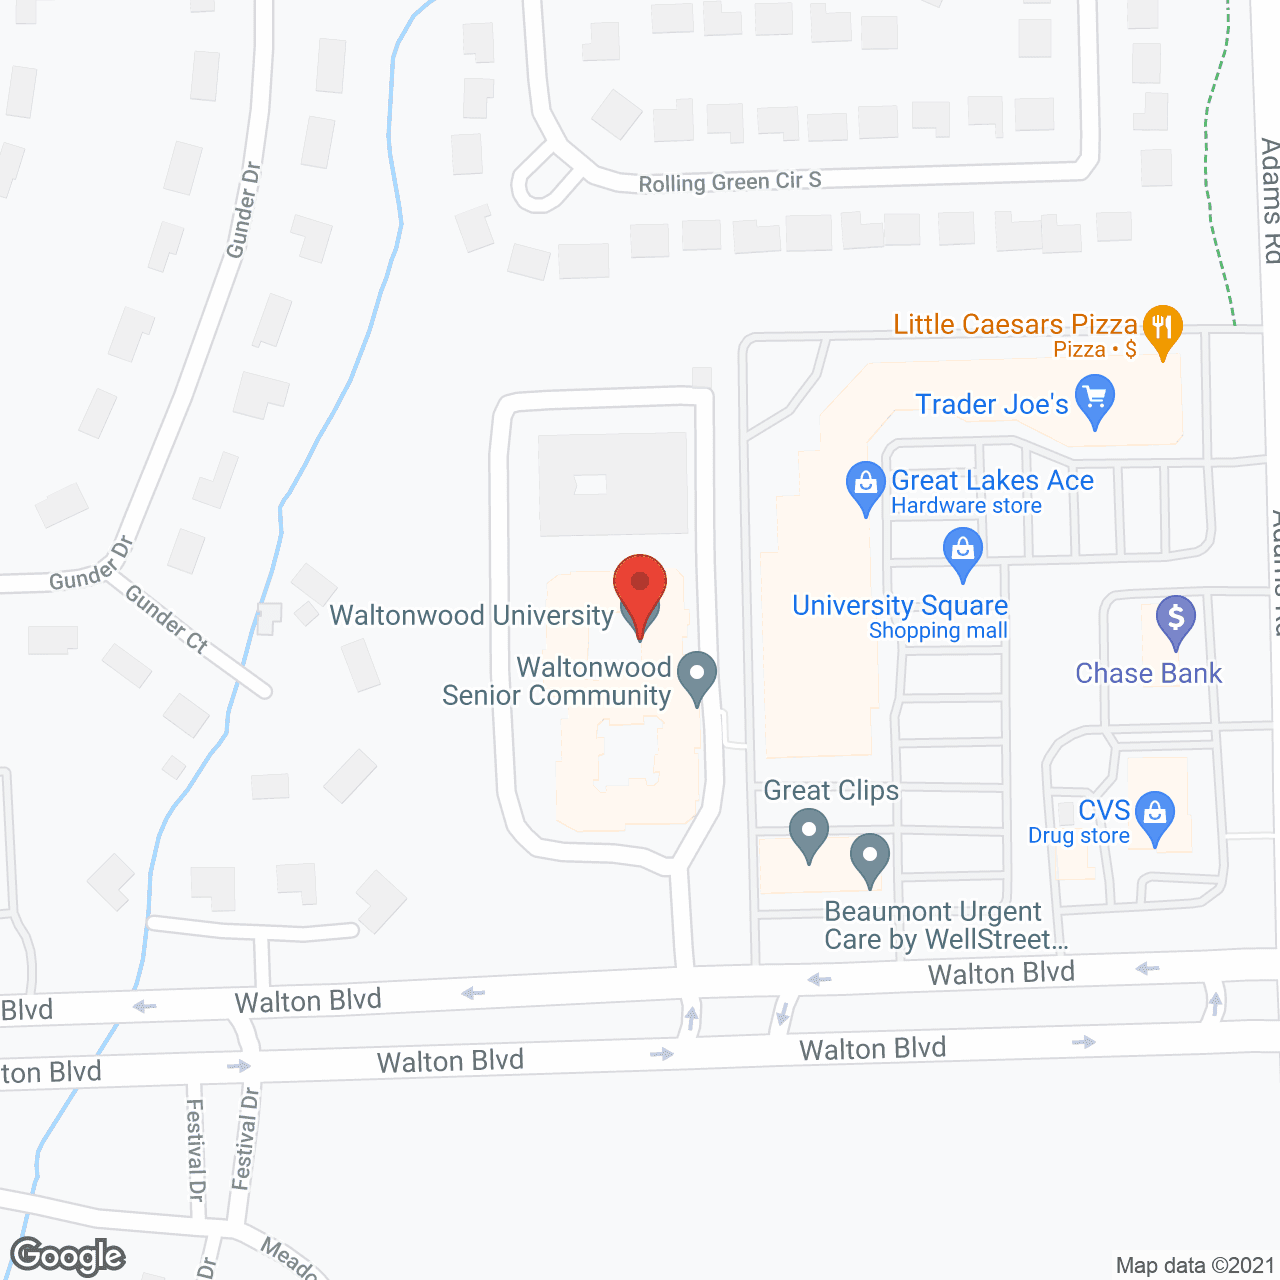 Waltonwood University in google map